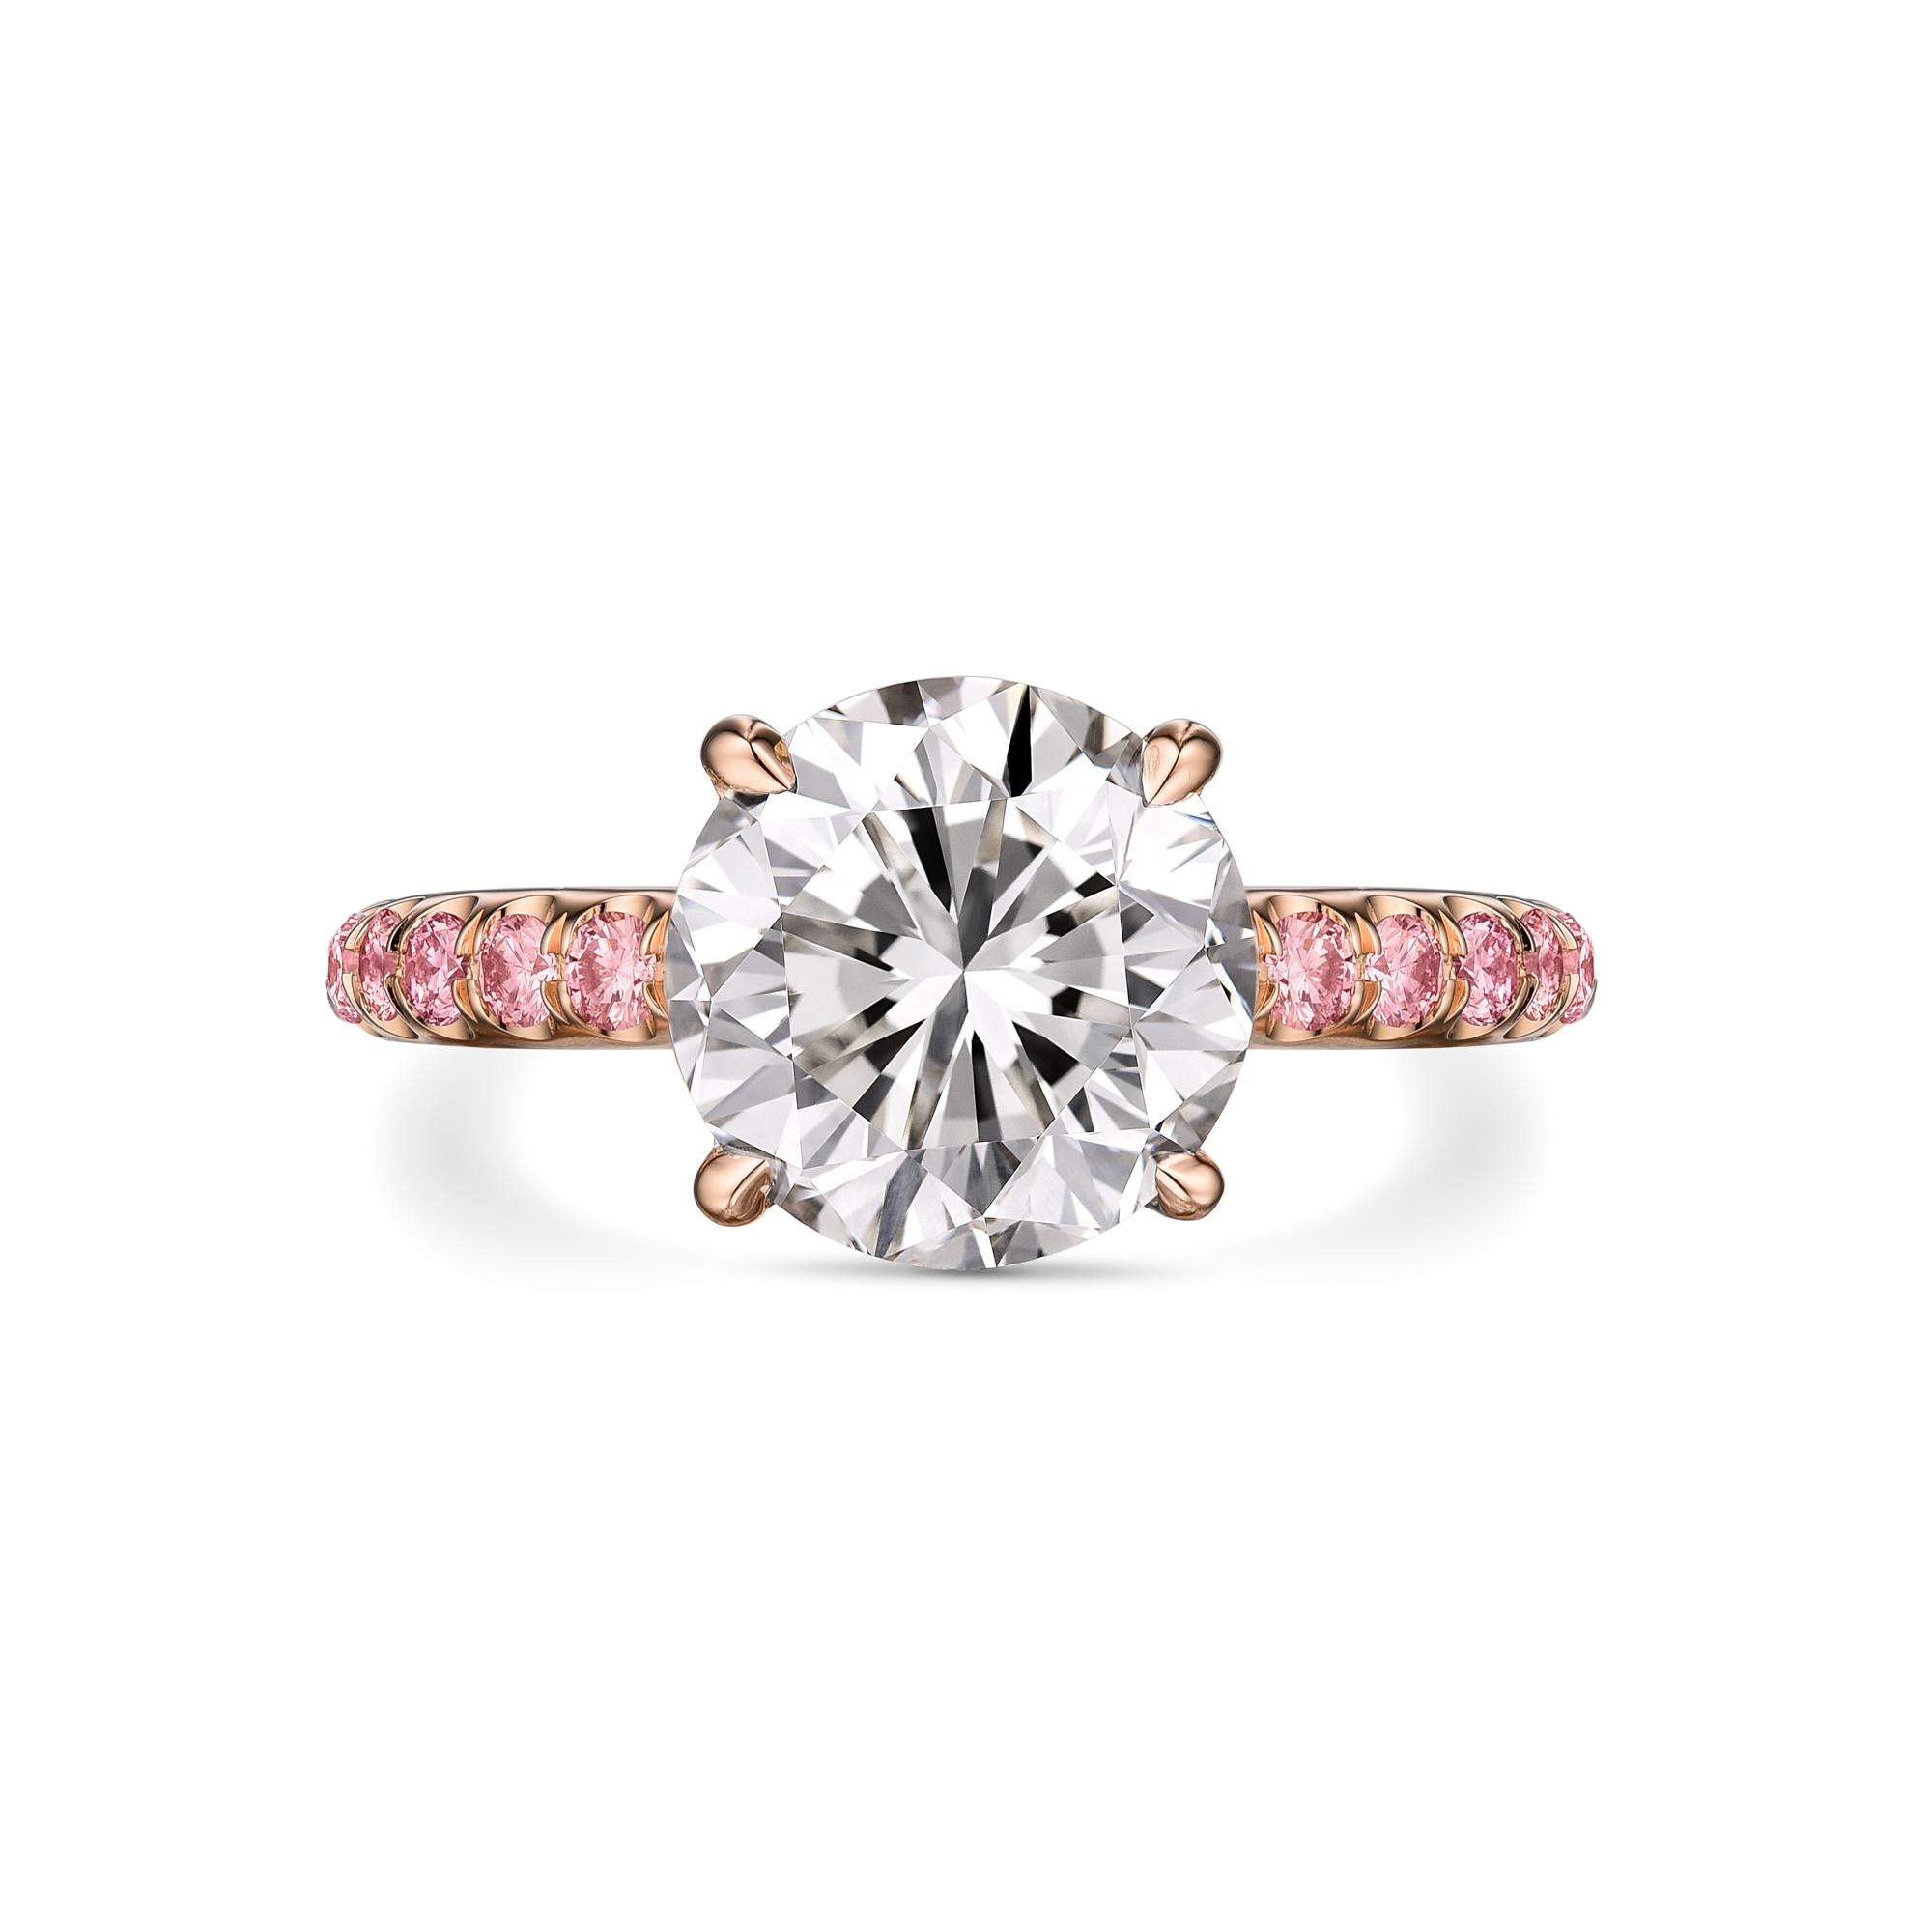 Diamond platinum ring with GIA certificate, no. 2223385118. Center stone: 3.01ct / L color, VS2 Brilliant Round cut diamond. Measurements: 8.82 x 8.84 x 5.90 mm. Side stones: .50ct / Fancy Pink Brilliant round. Metal: 14K Rose gold. Ring Weight: 3.8